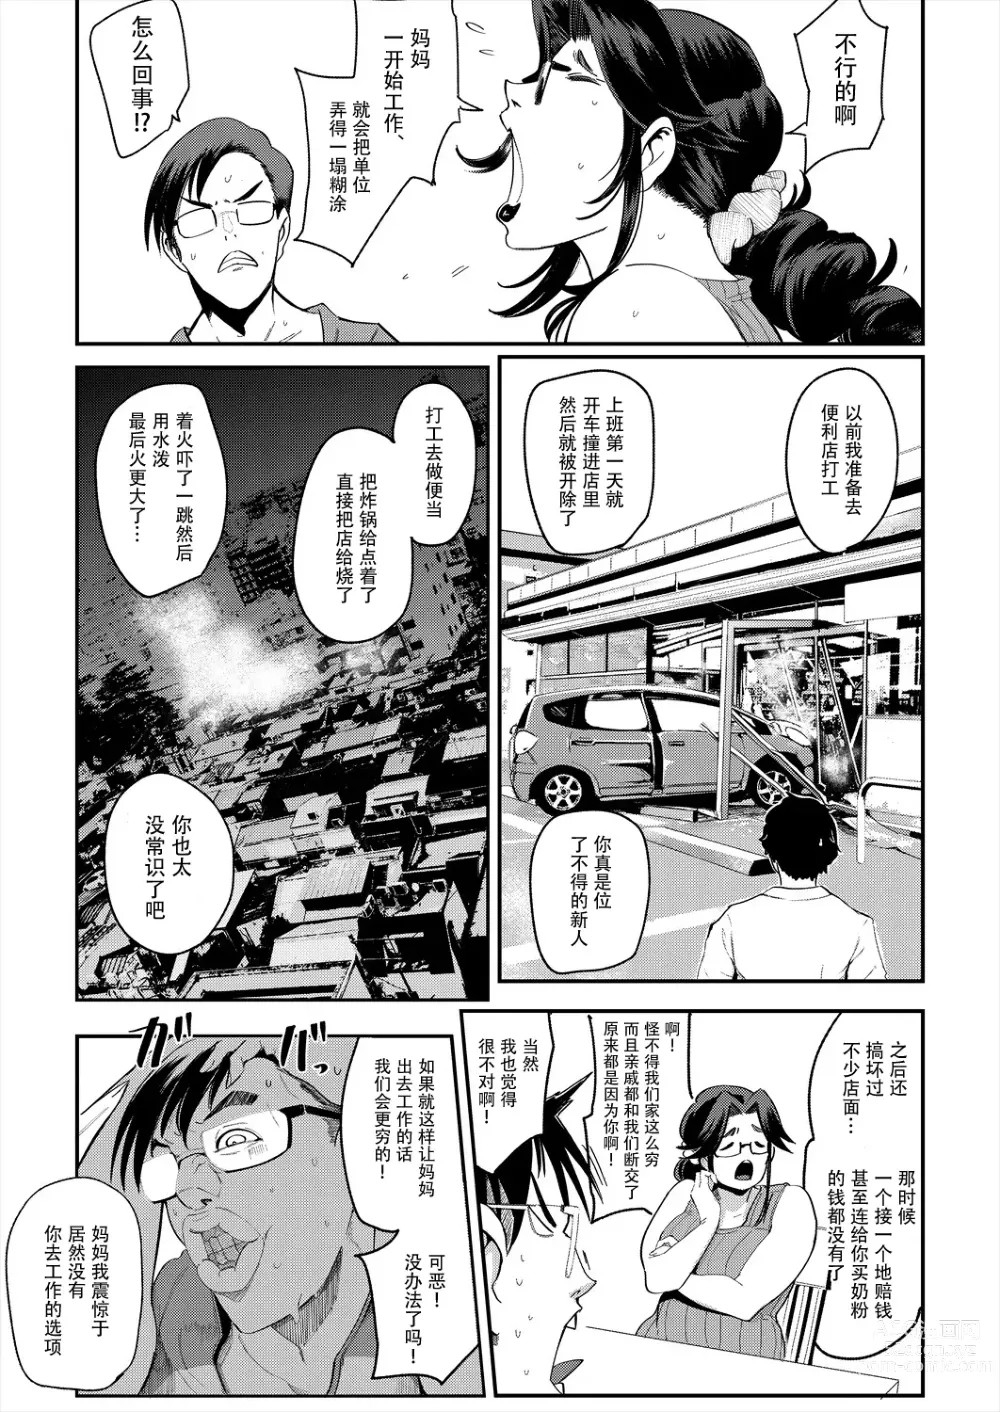 Page 3 of manga Subscription Mama!